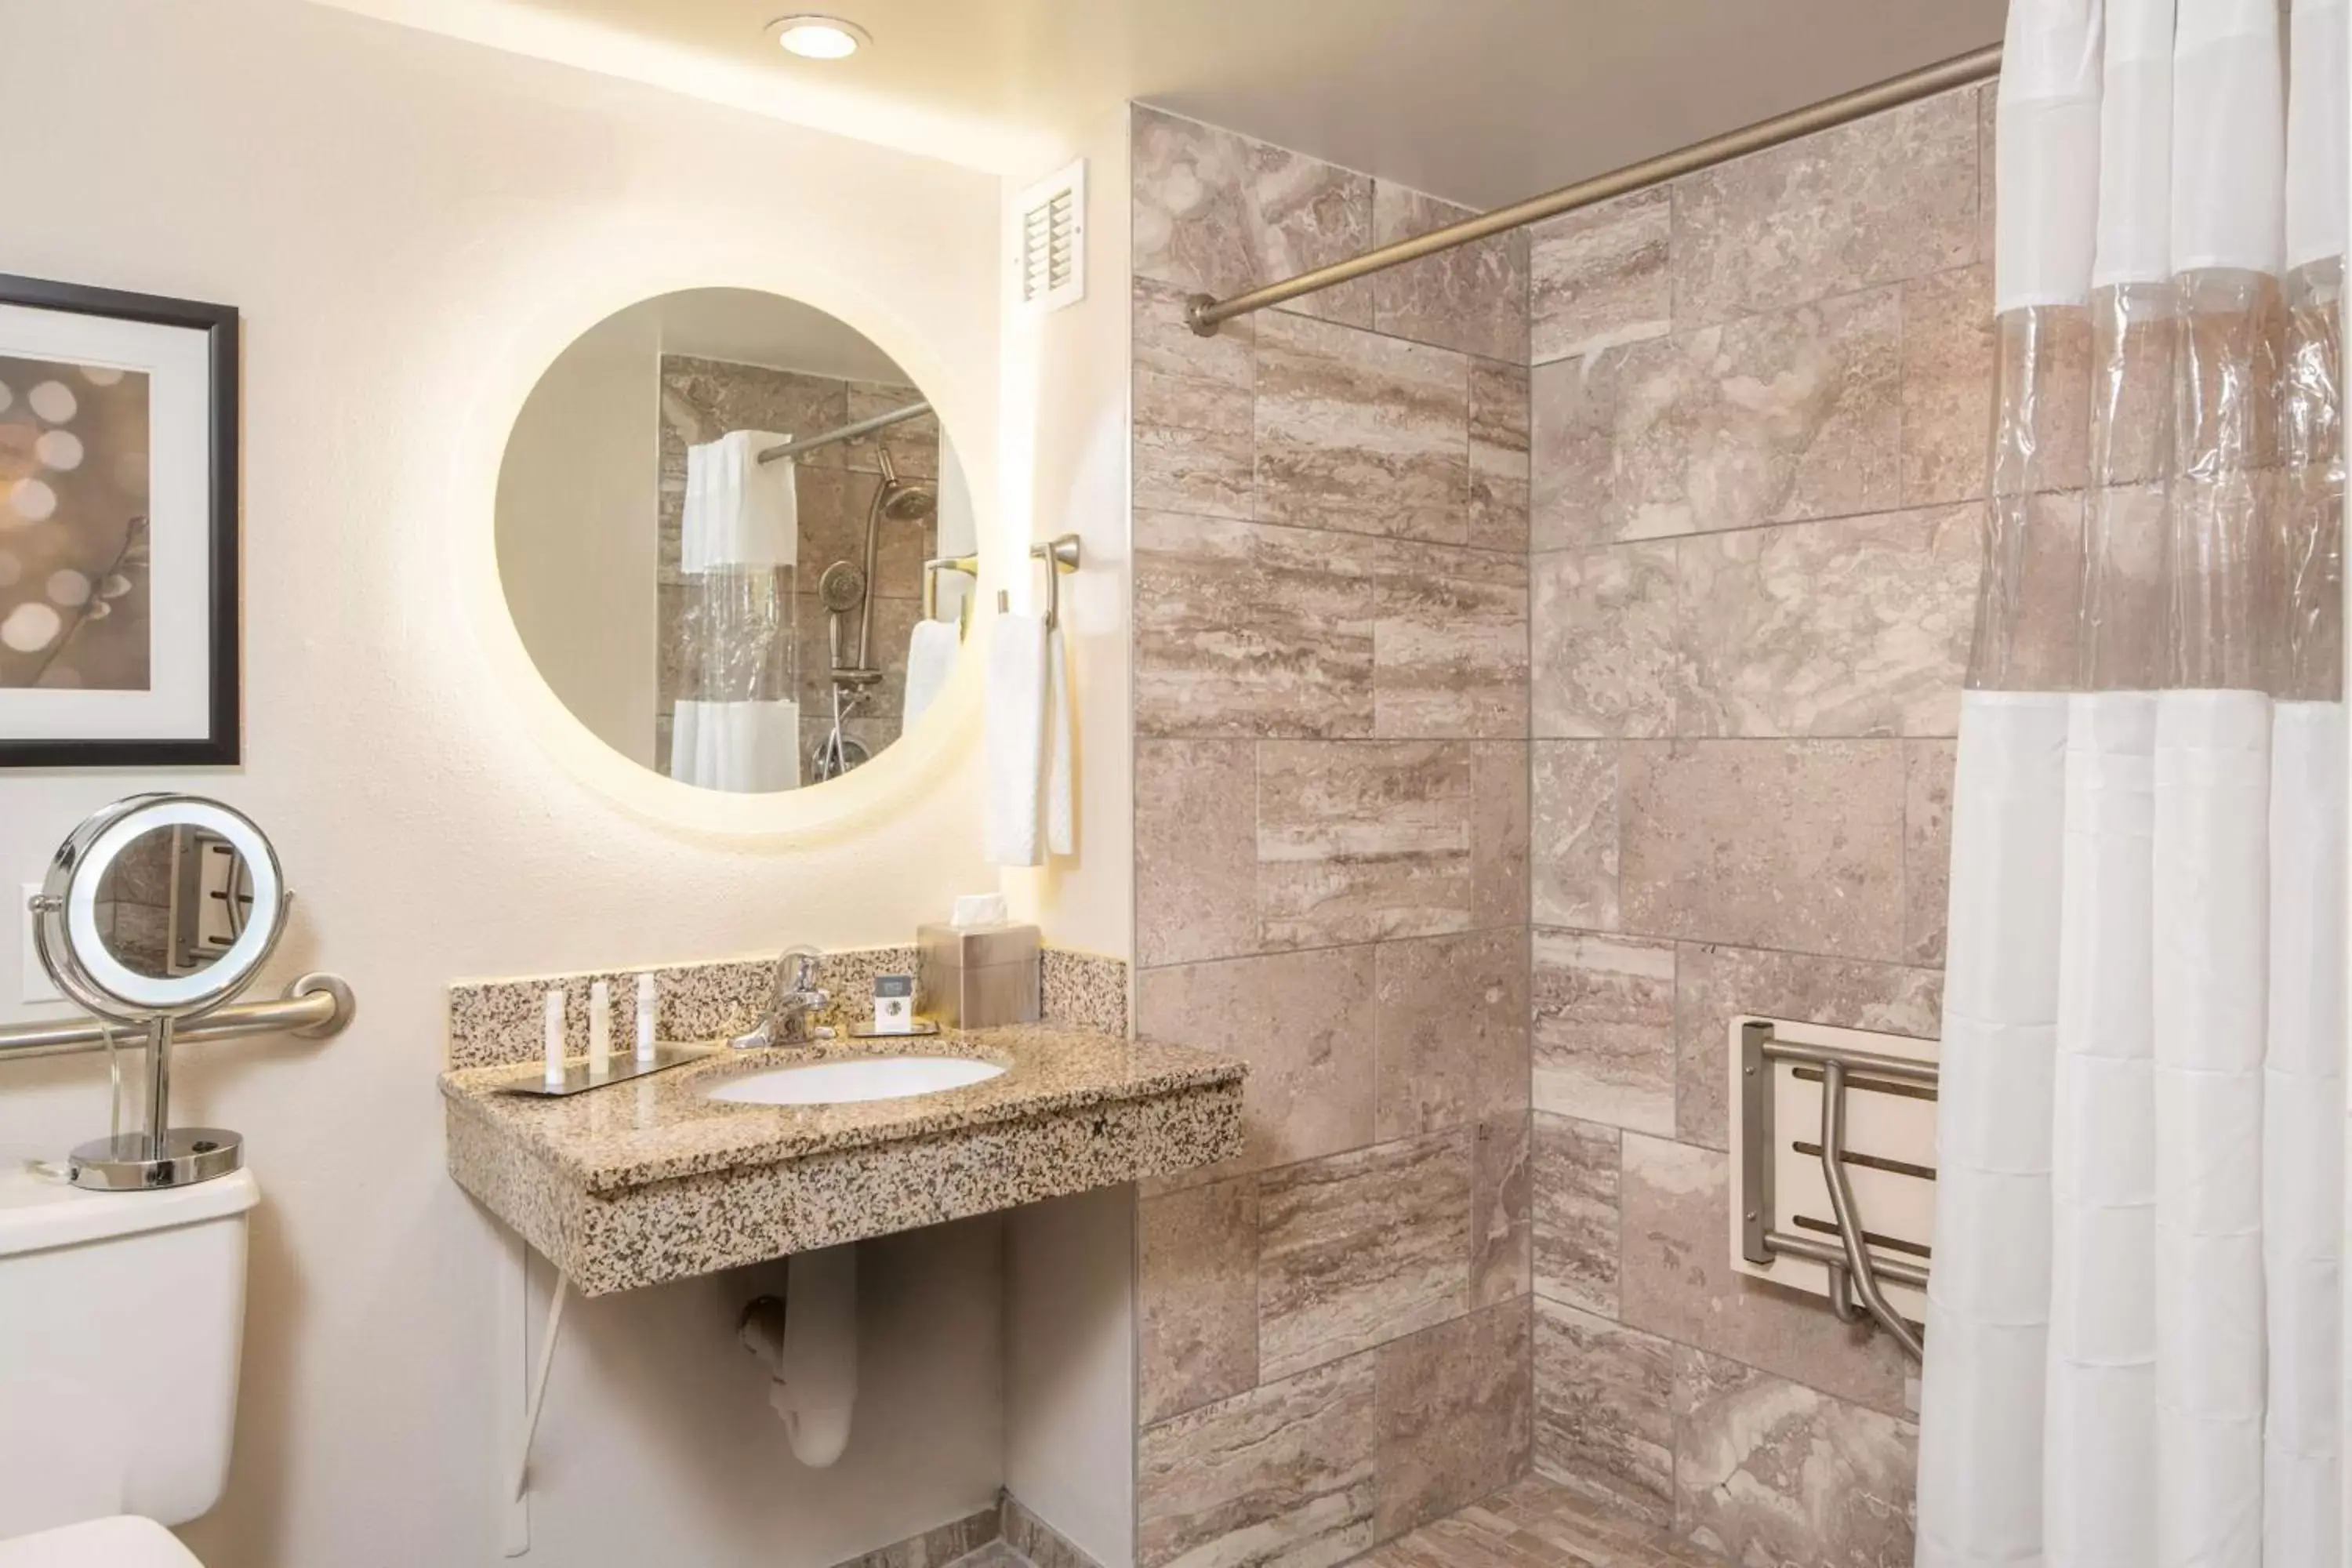 Bathroom in Doubletree by Hilton Laurel, MD